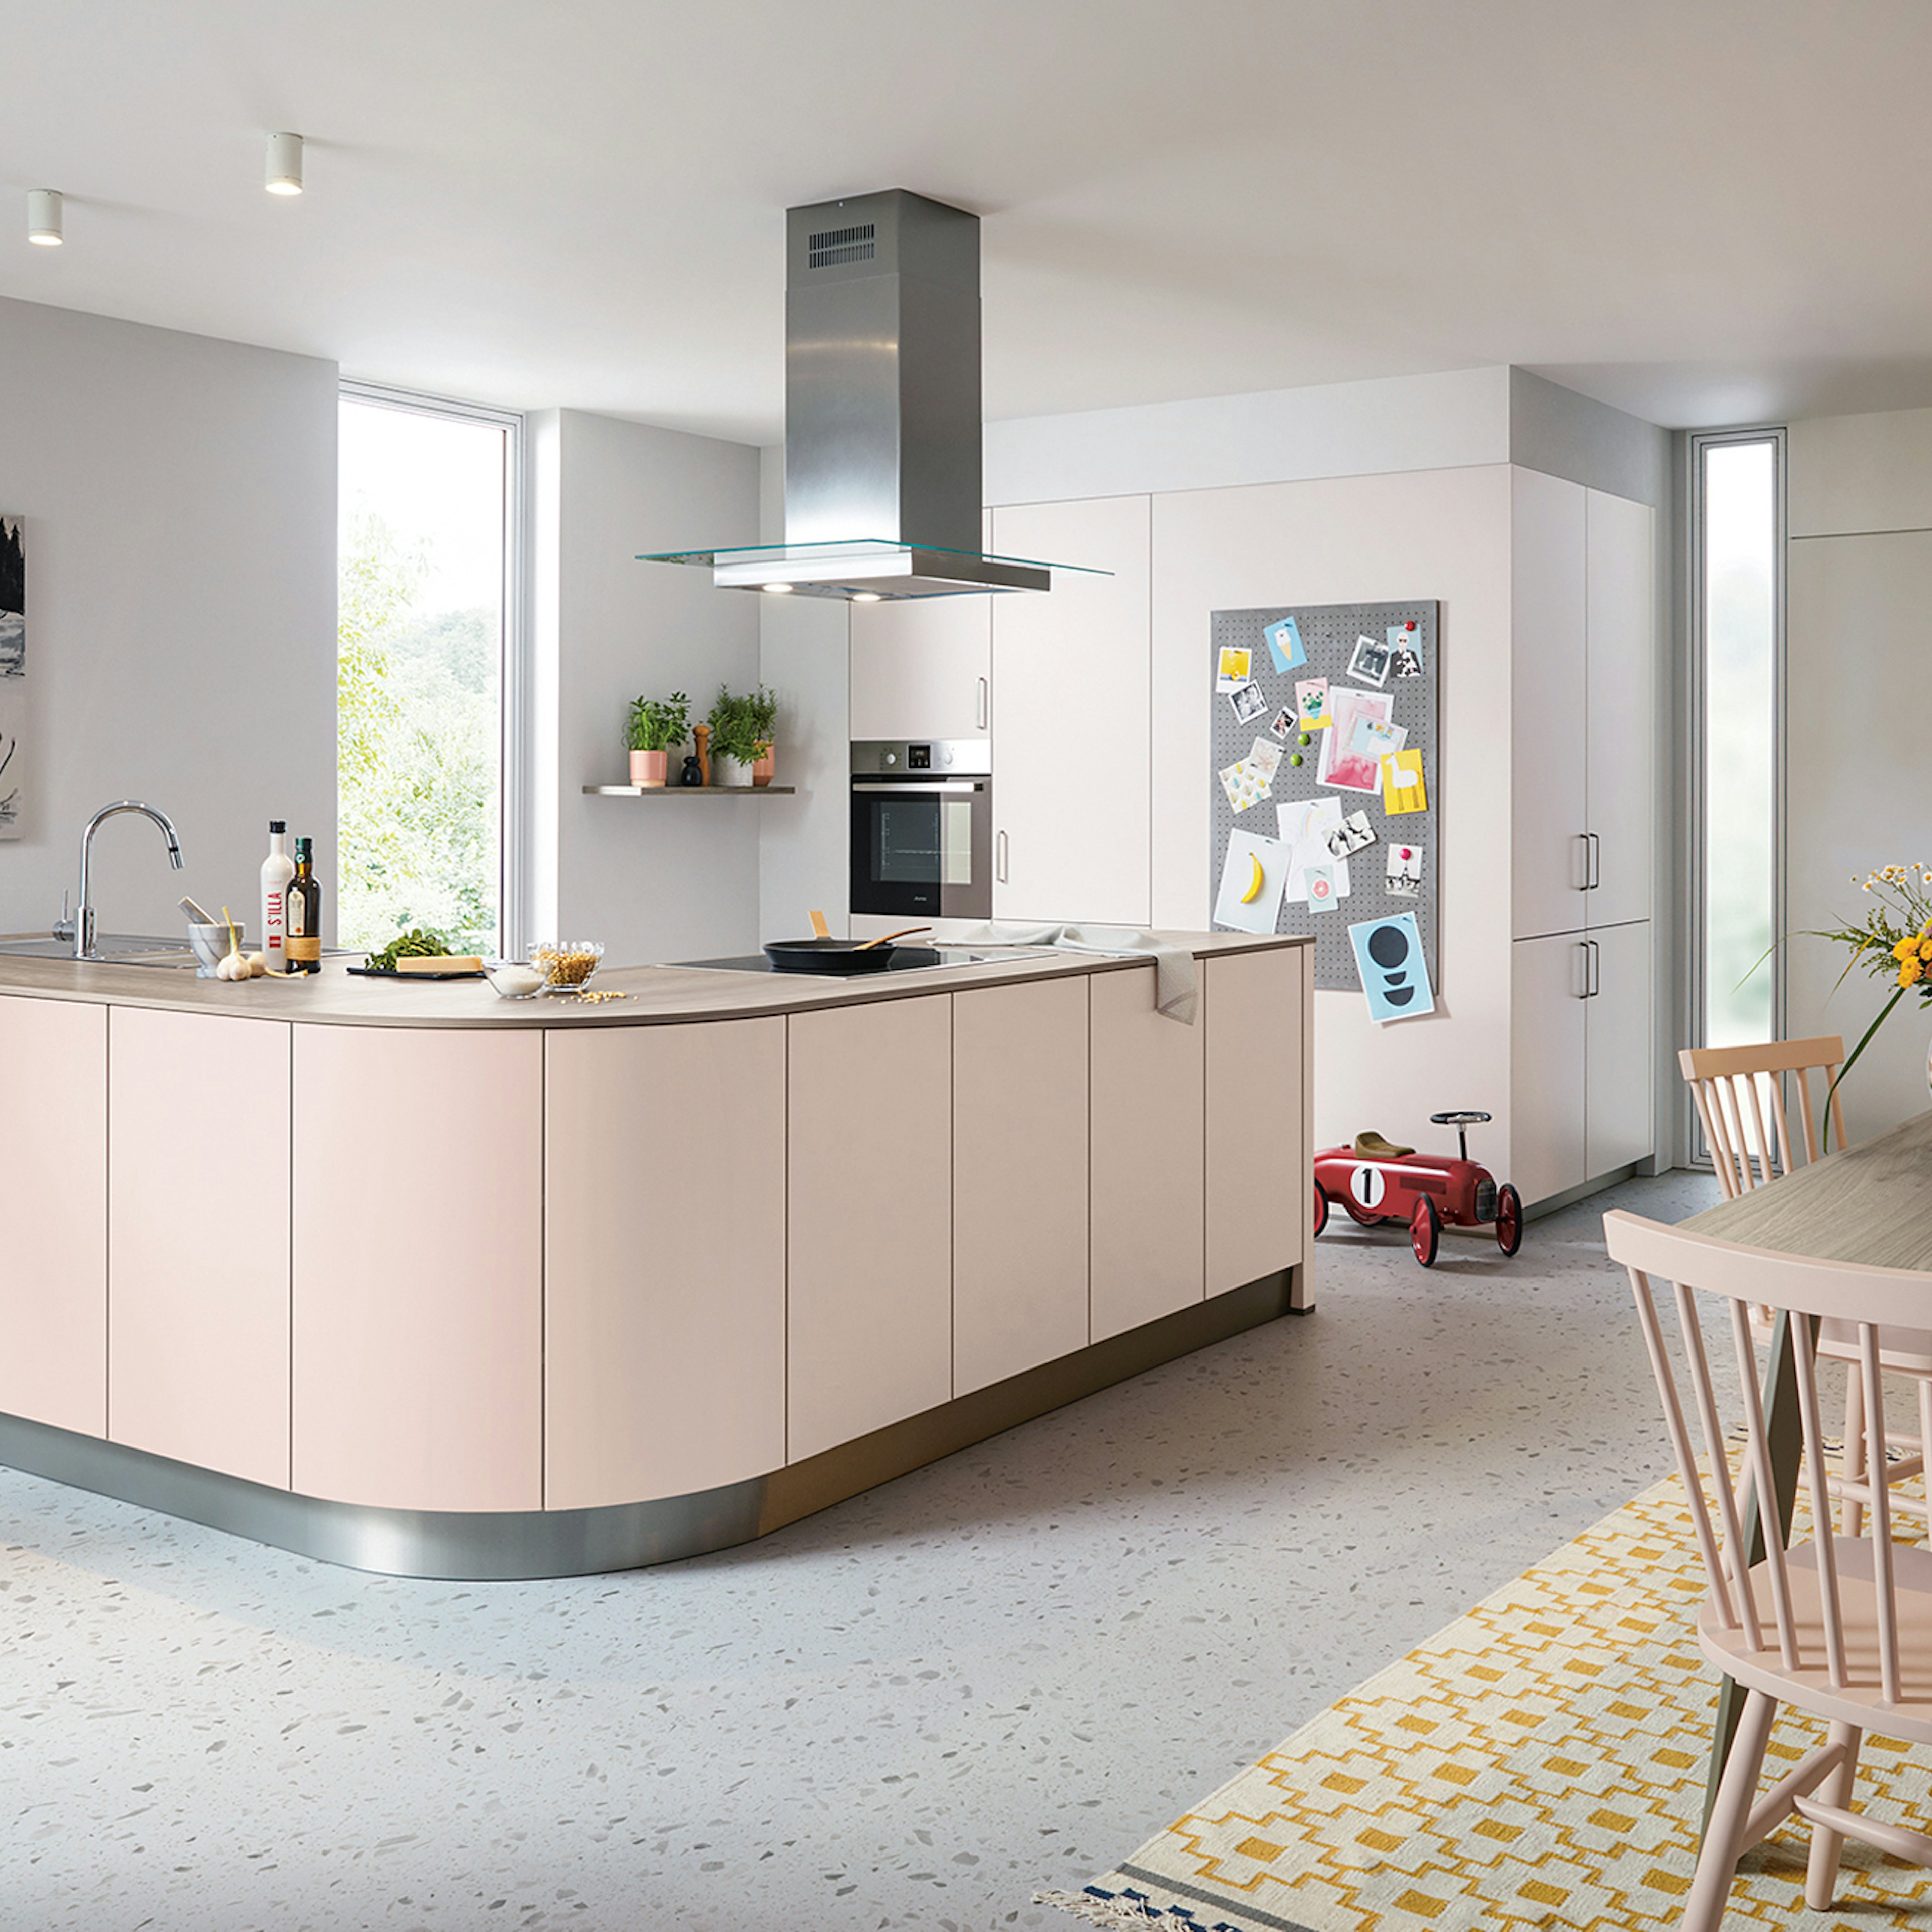 Design keuken in de kleuren zachtroze en mosselwit.